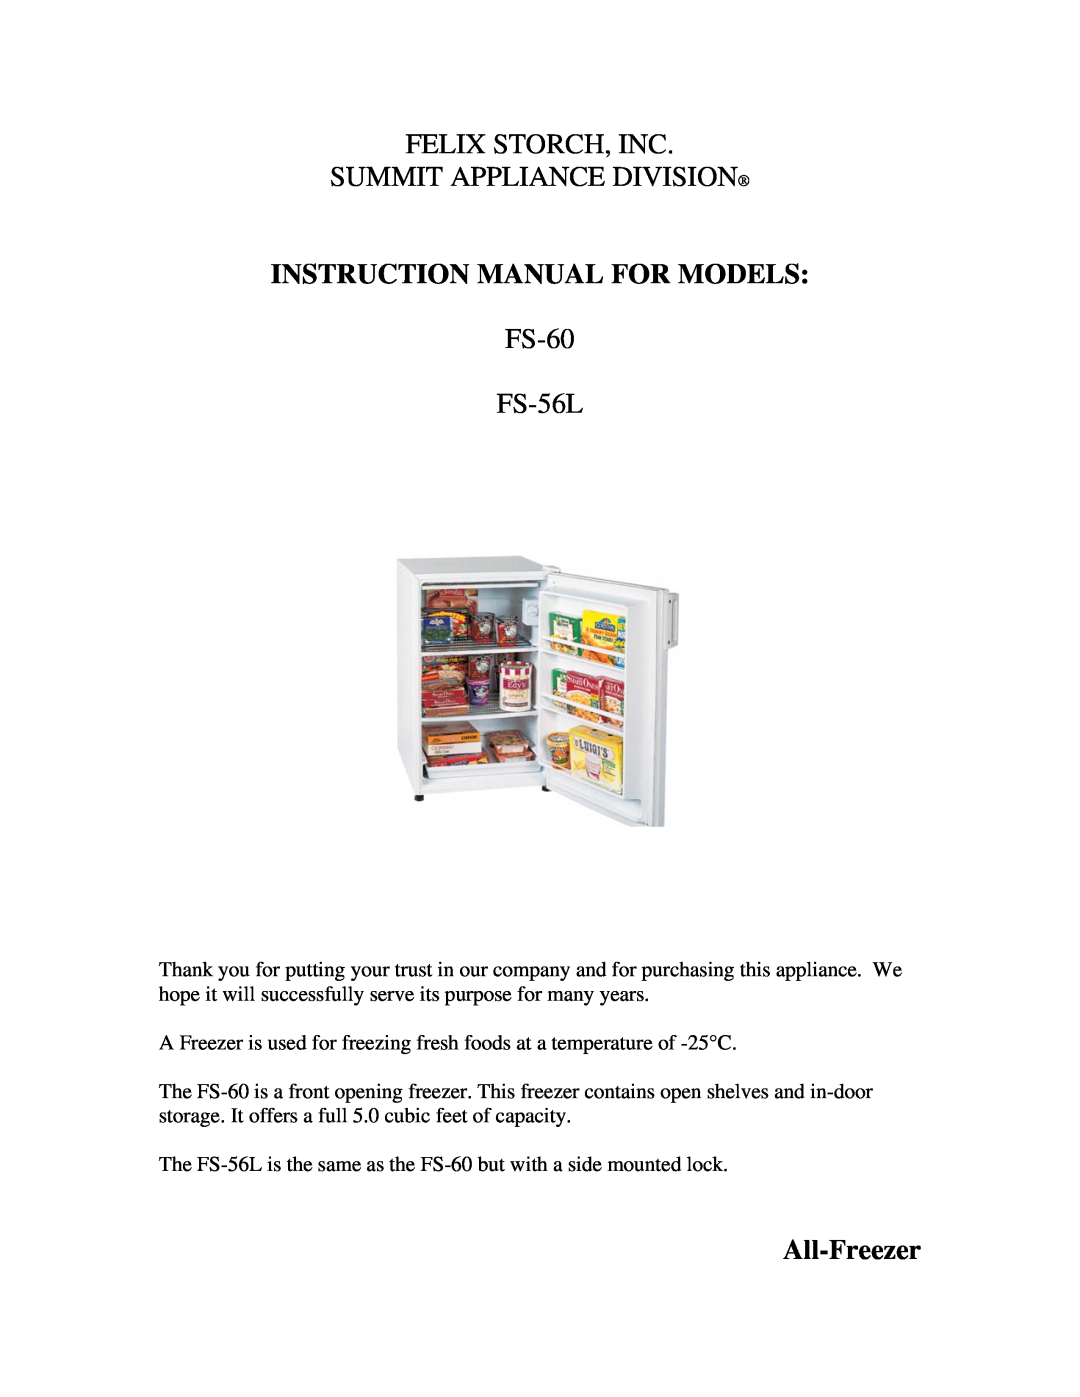 Summit instruction manual All-Freezer, Felix Storch, Inc Summit Appliance Division, FS-60 FS-56L 